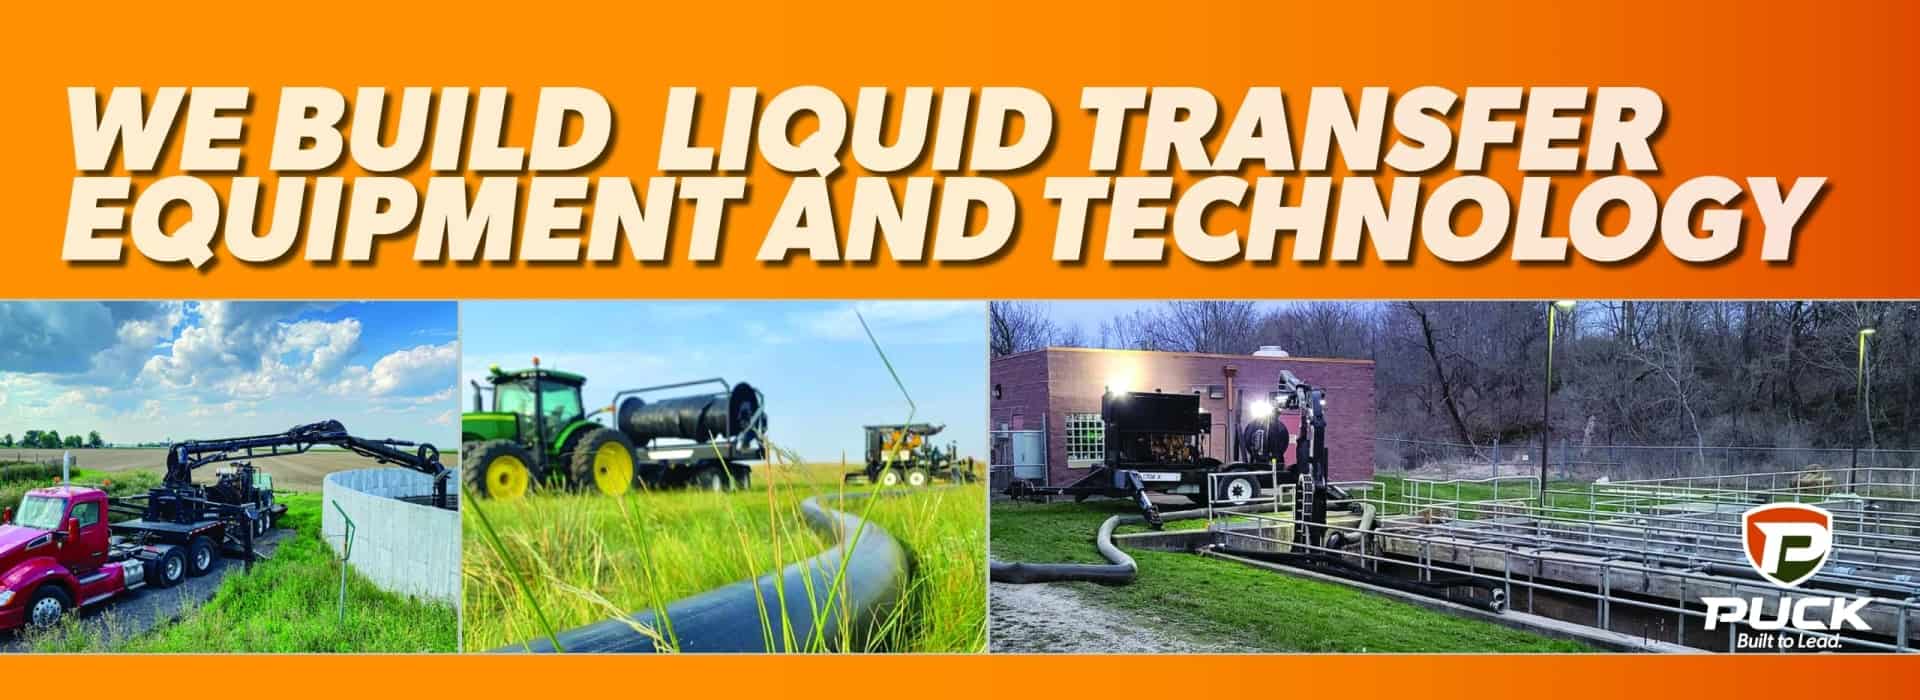 liquid and manure transfer equipment